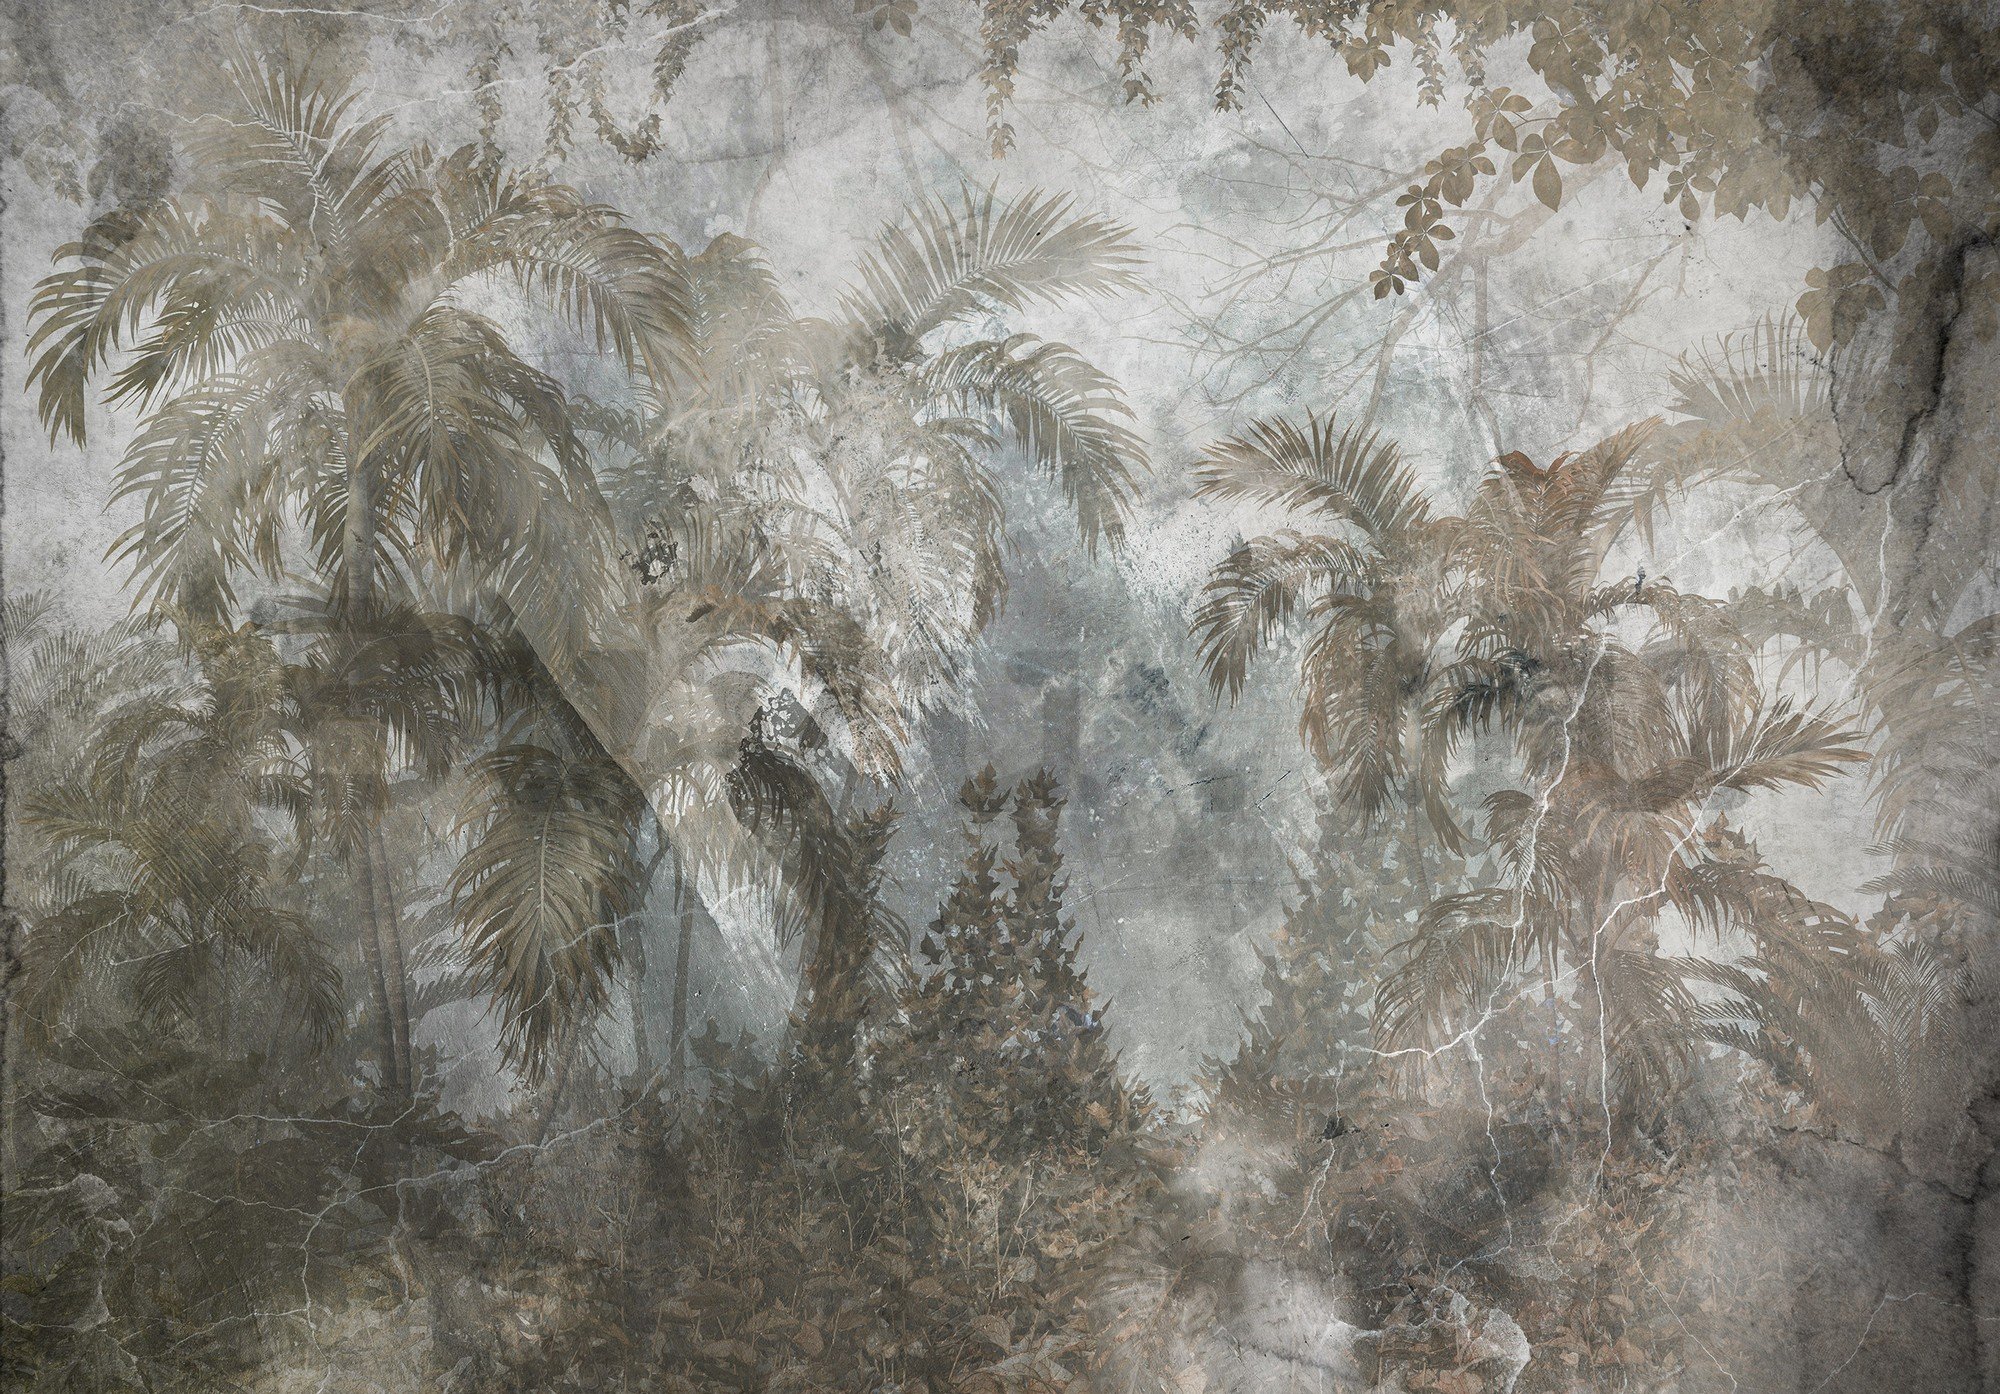 Vlies fotótapéta: Dzsungel (beton utánzat) - 254x184 cm